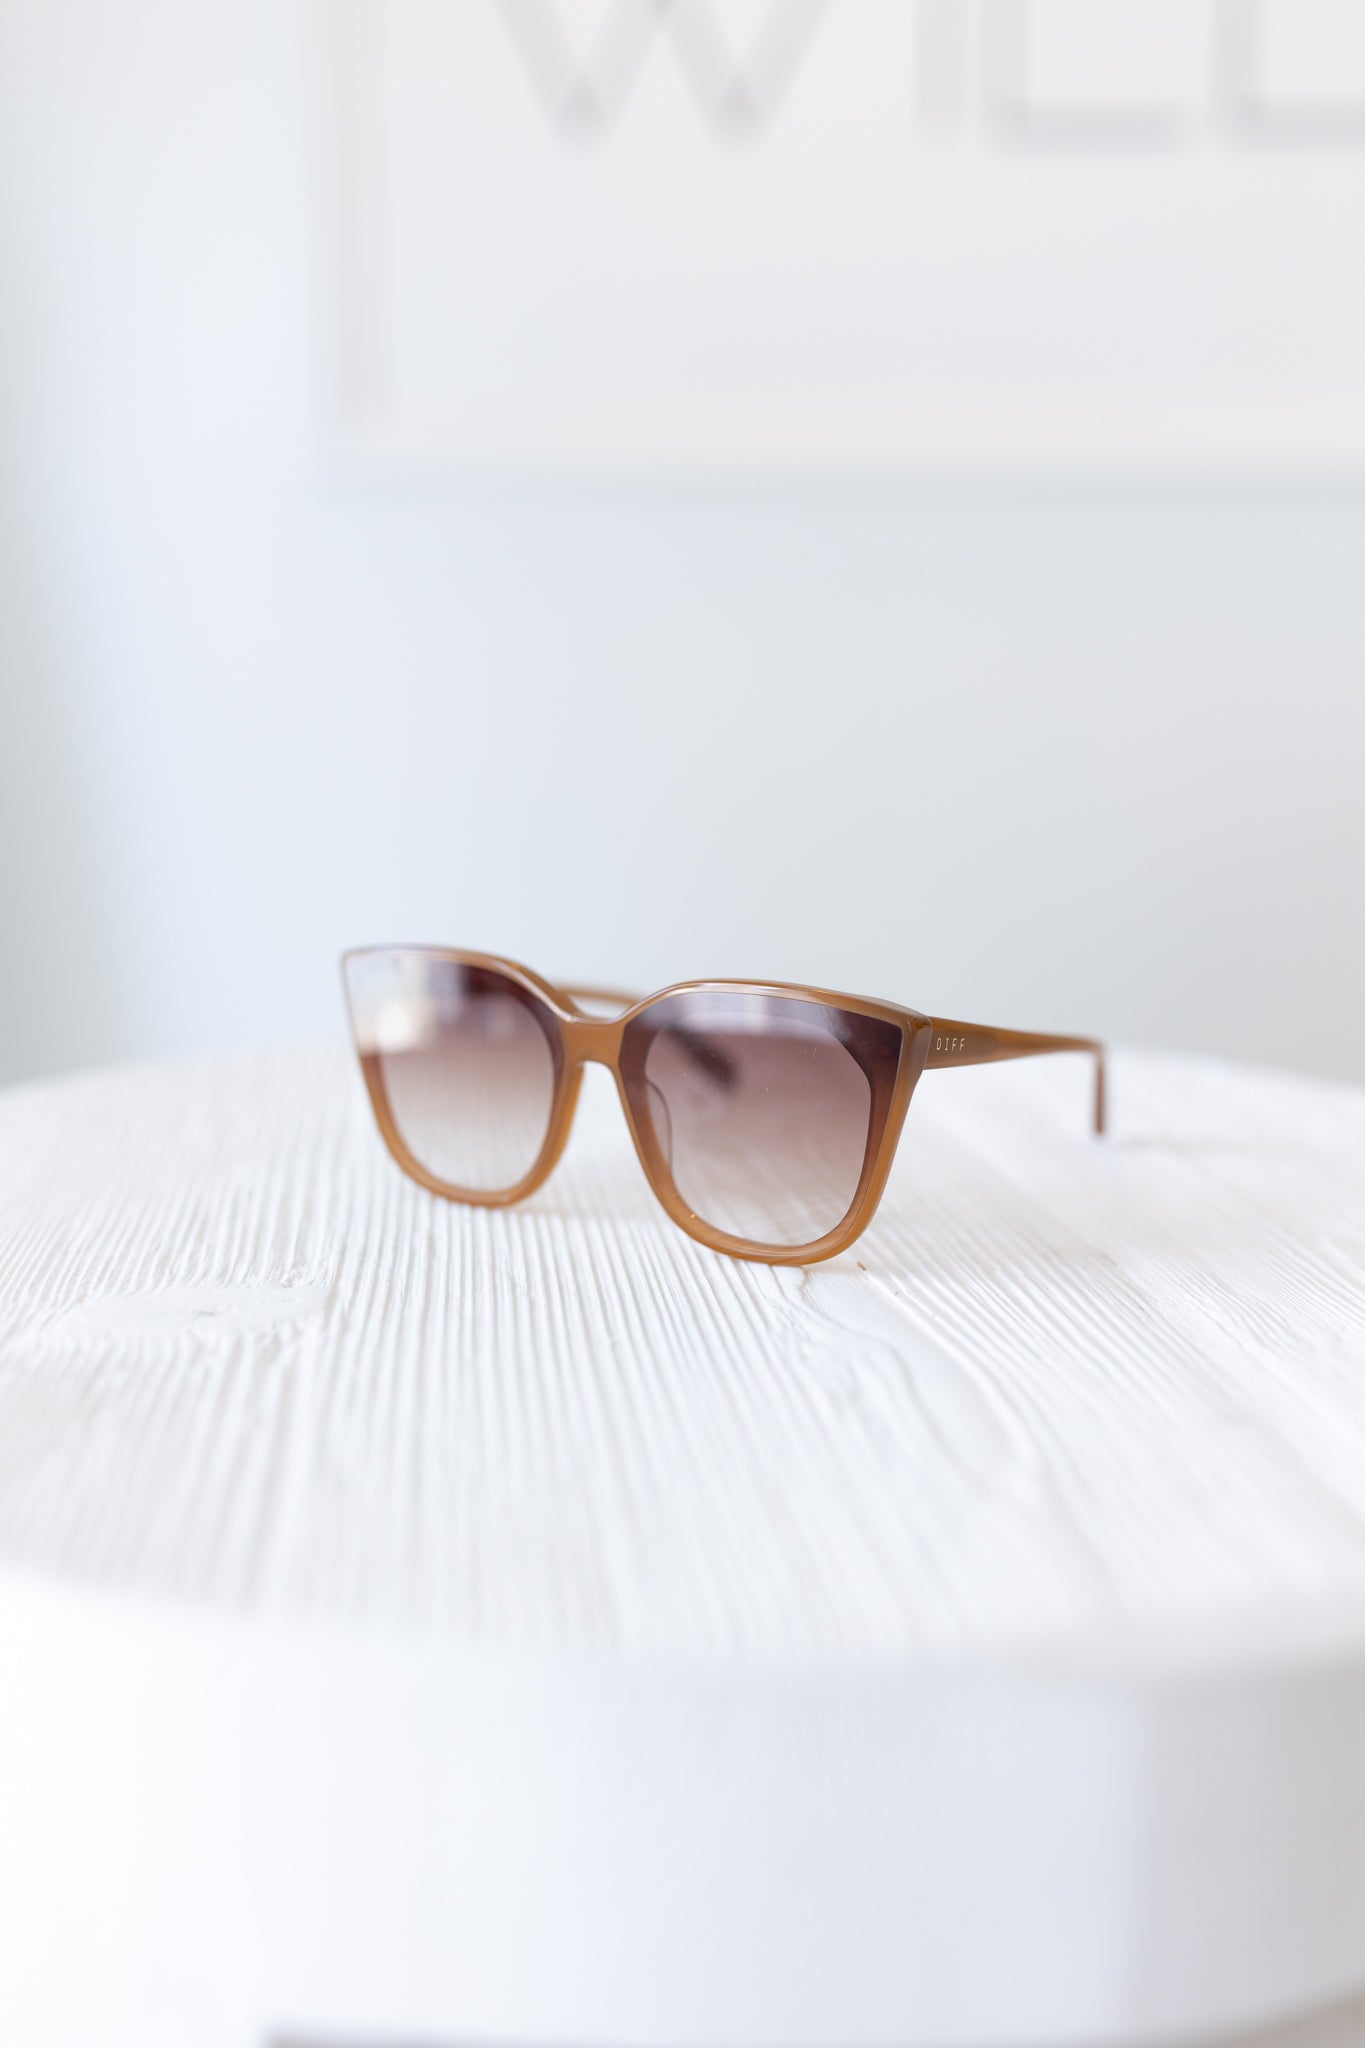 Gjelina Caramel + Brown Gradient Sunglasses by DIFF